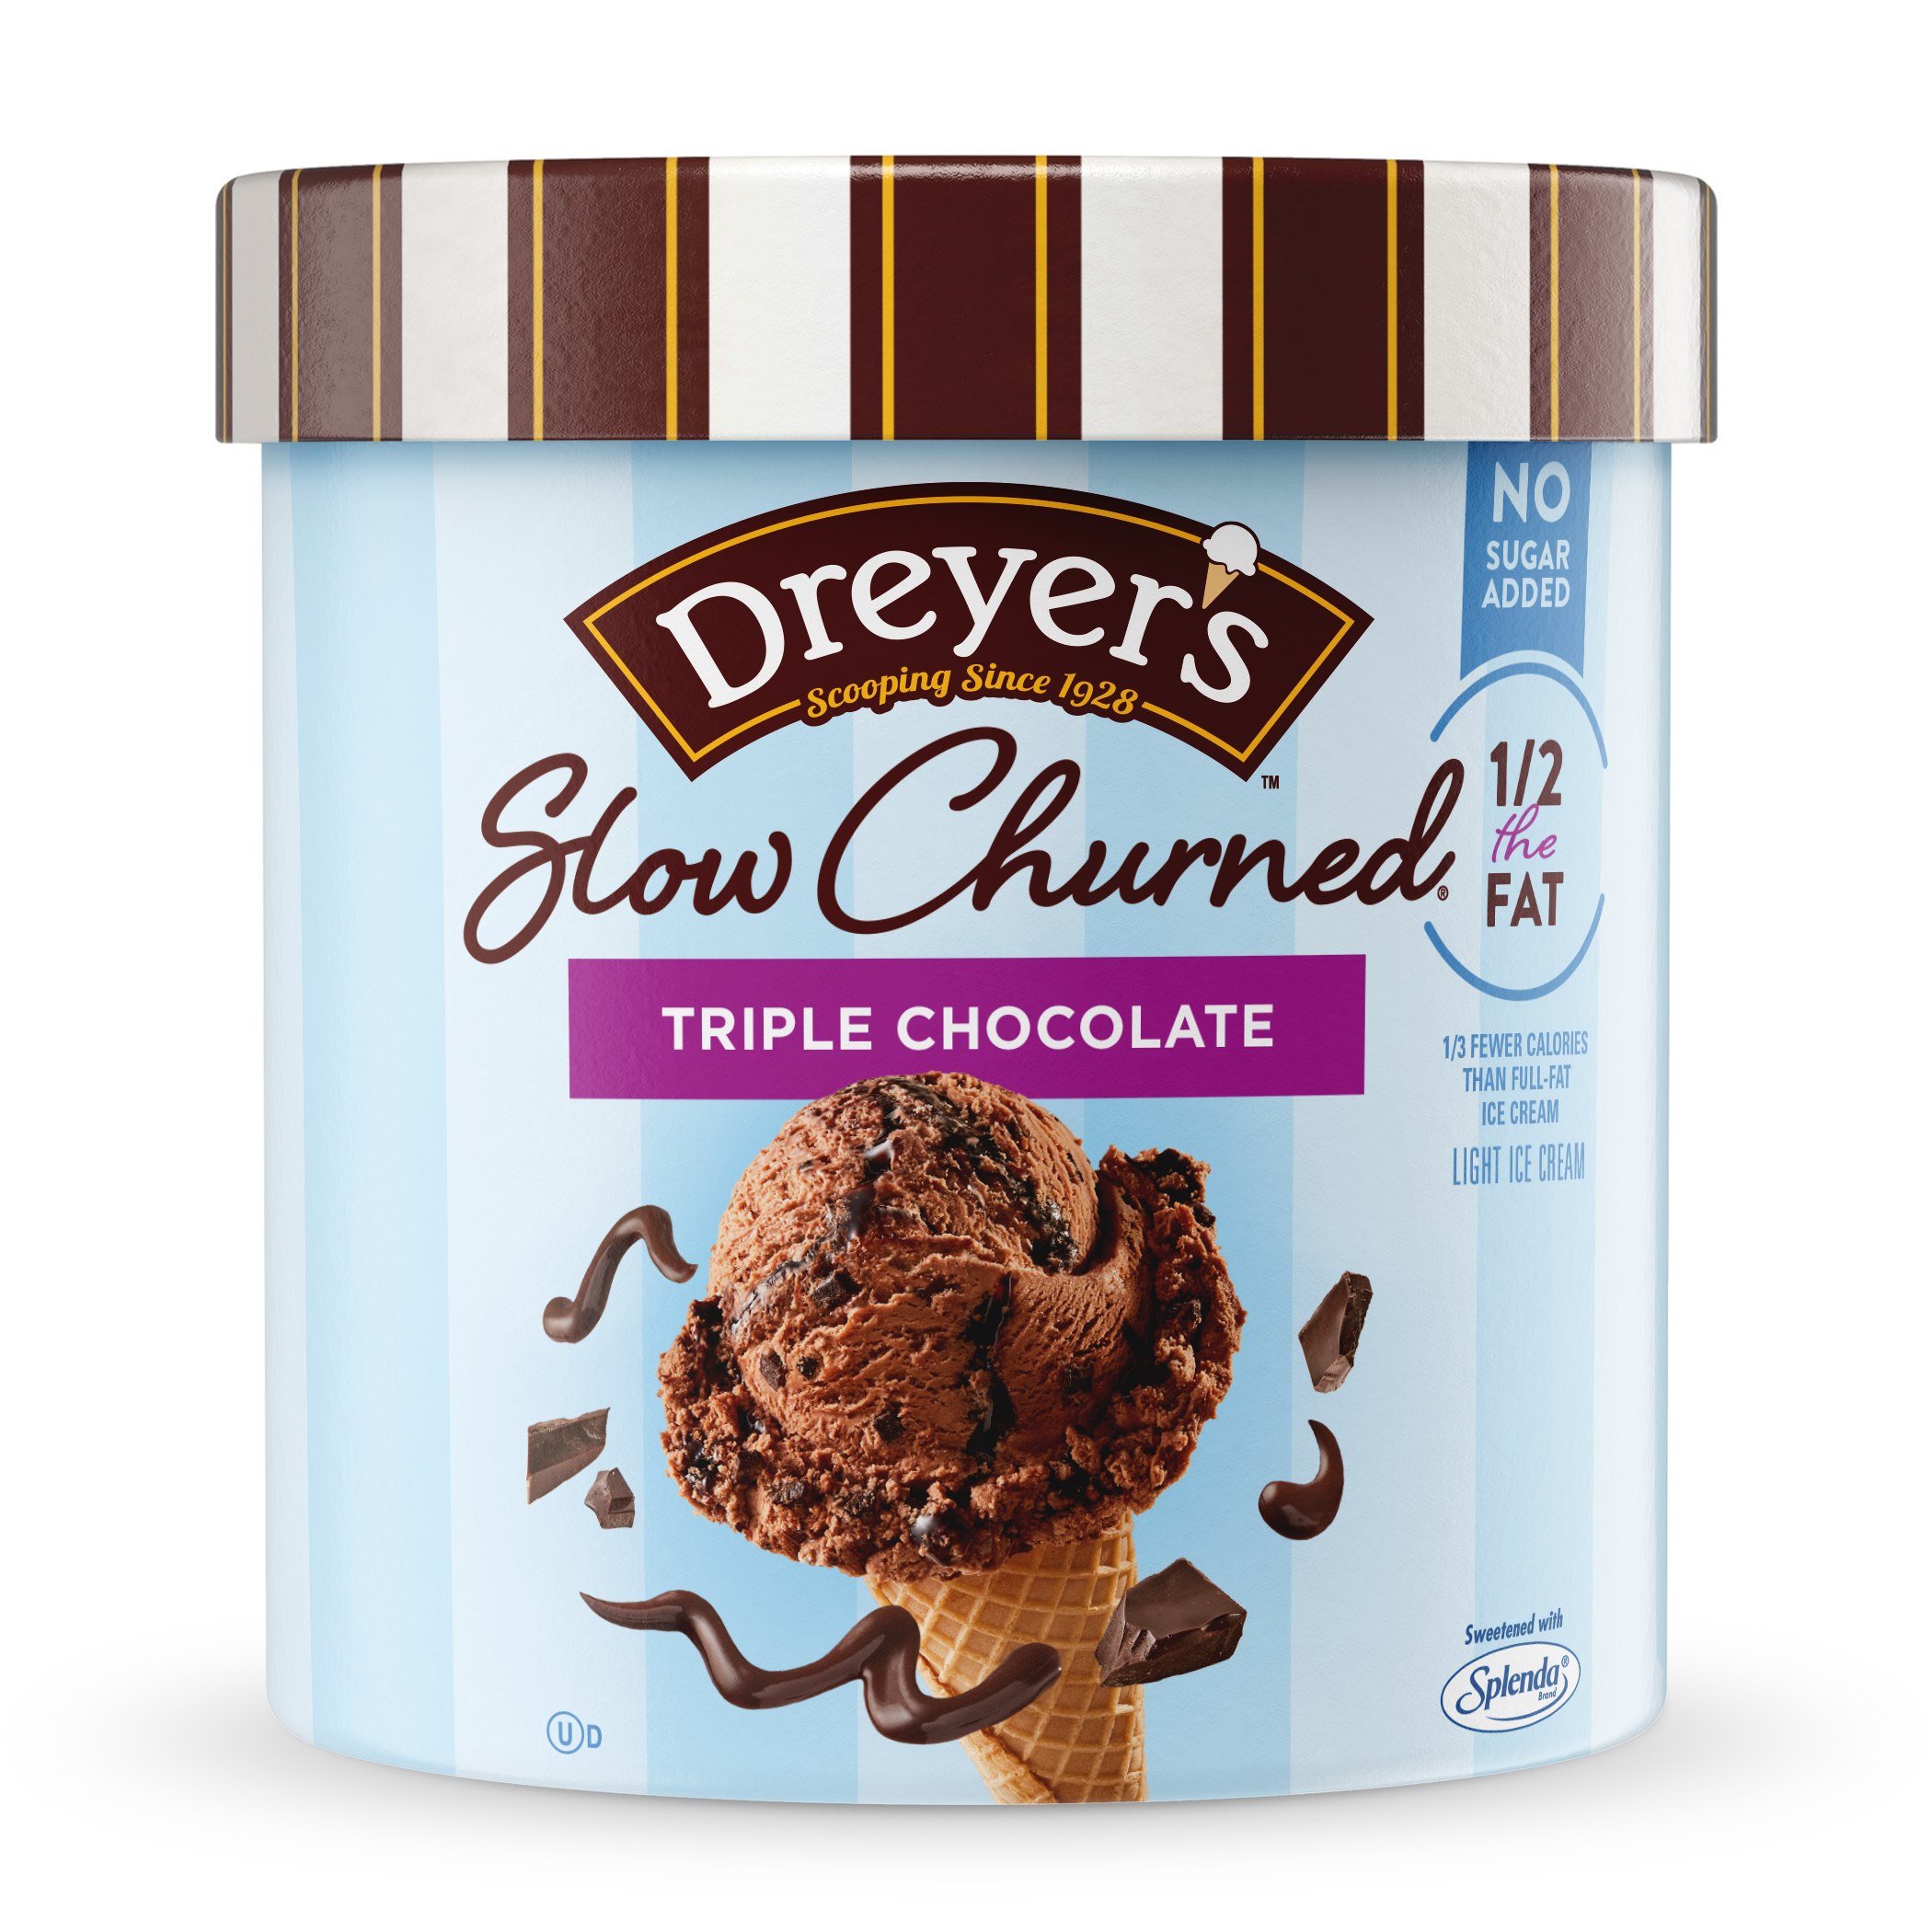 Carton of Dreyer's slow-churned triple chocolate ice cream